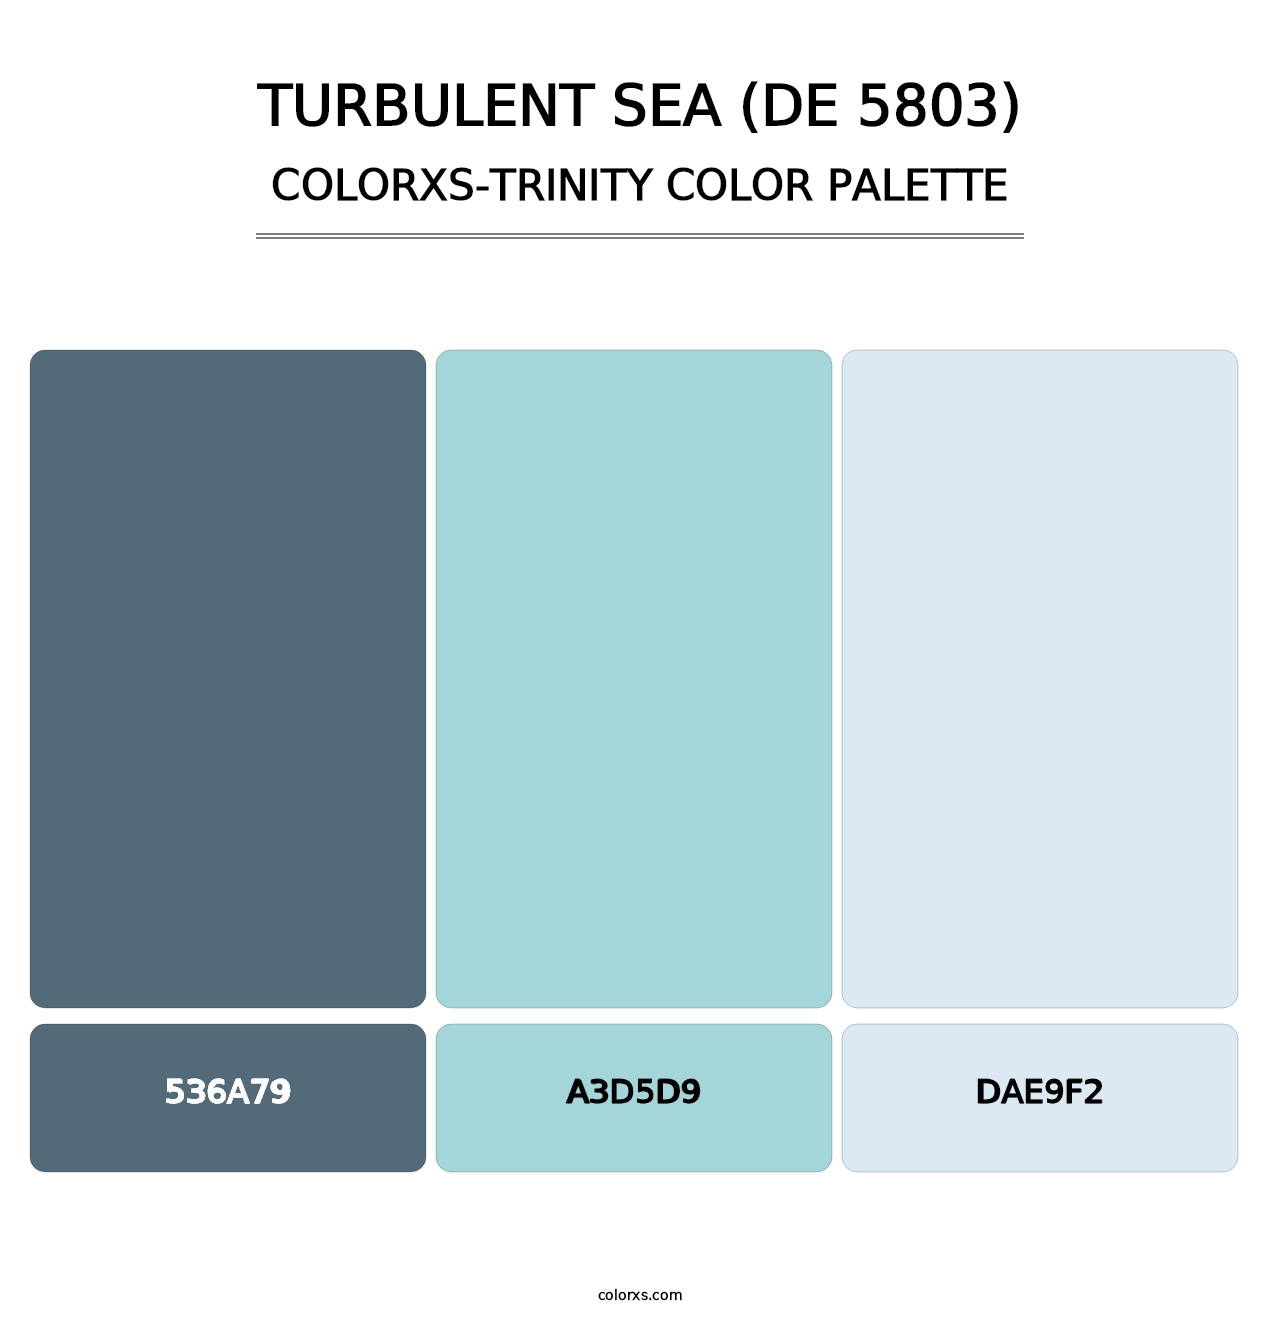 Turbulent Sea (DE 5803) - Colorxs Trinity Palette